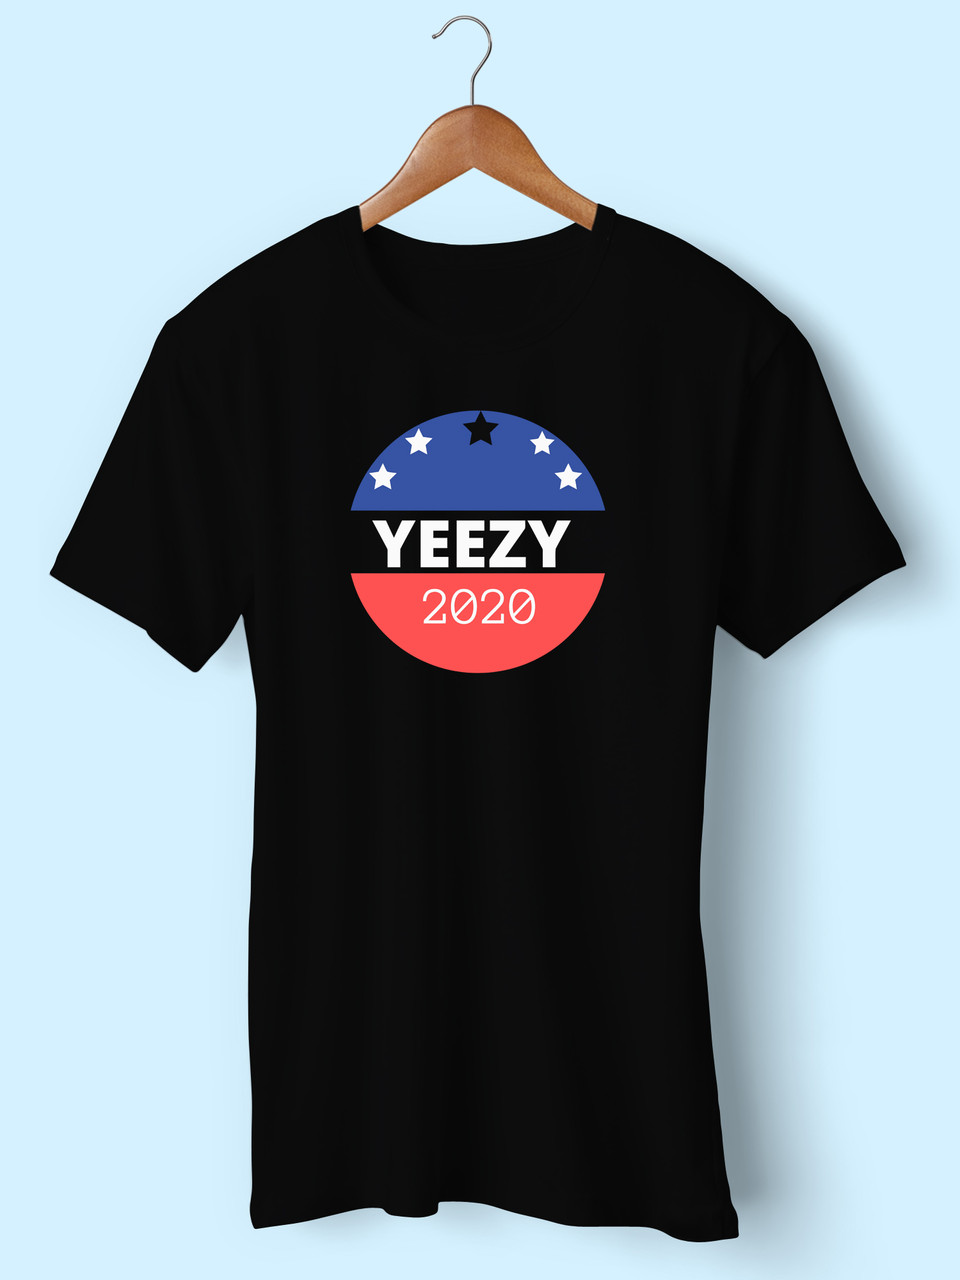 yeezy 2020 shirt